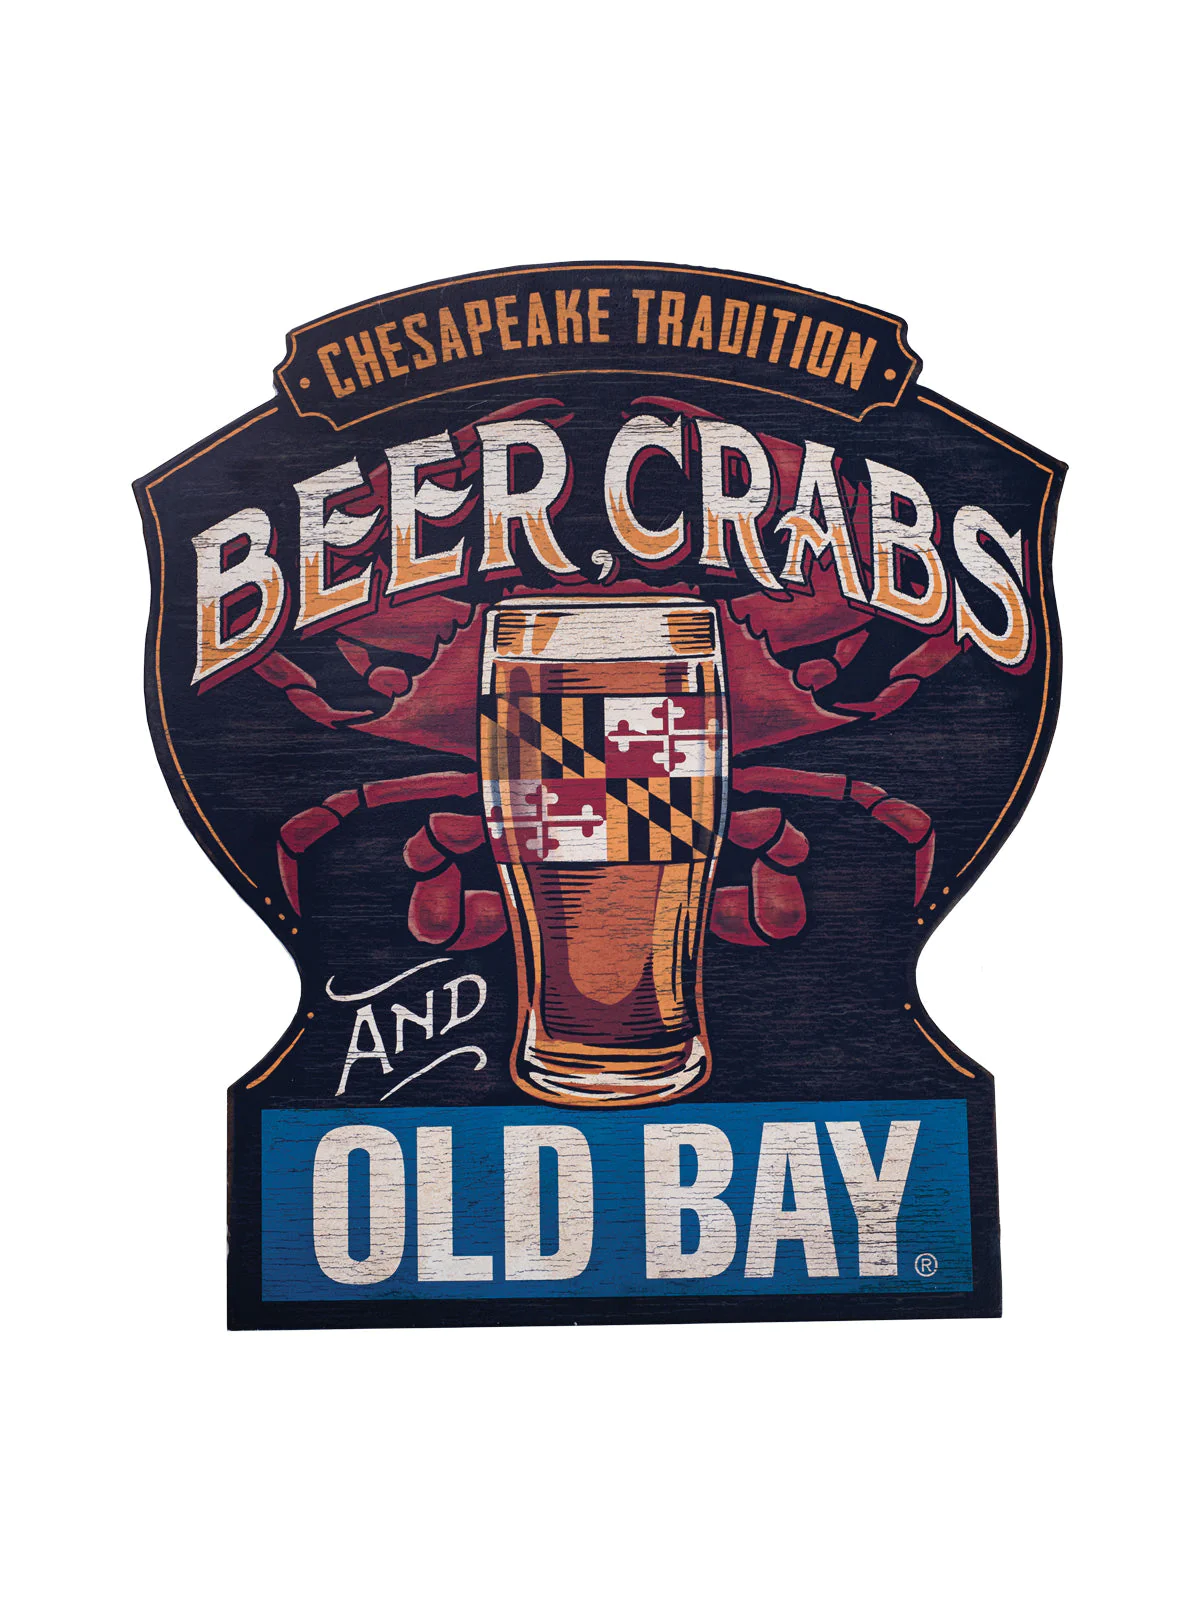 Old Bay Beer Crabs Sign